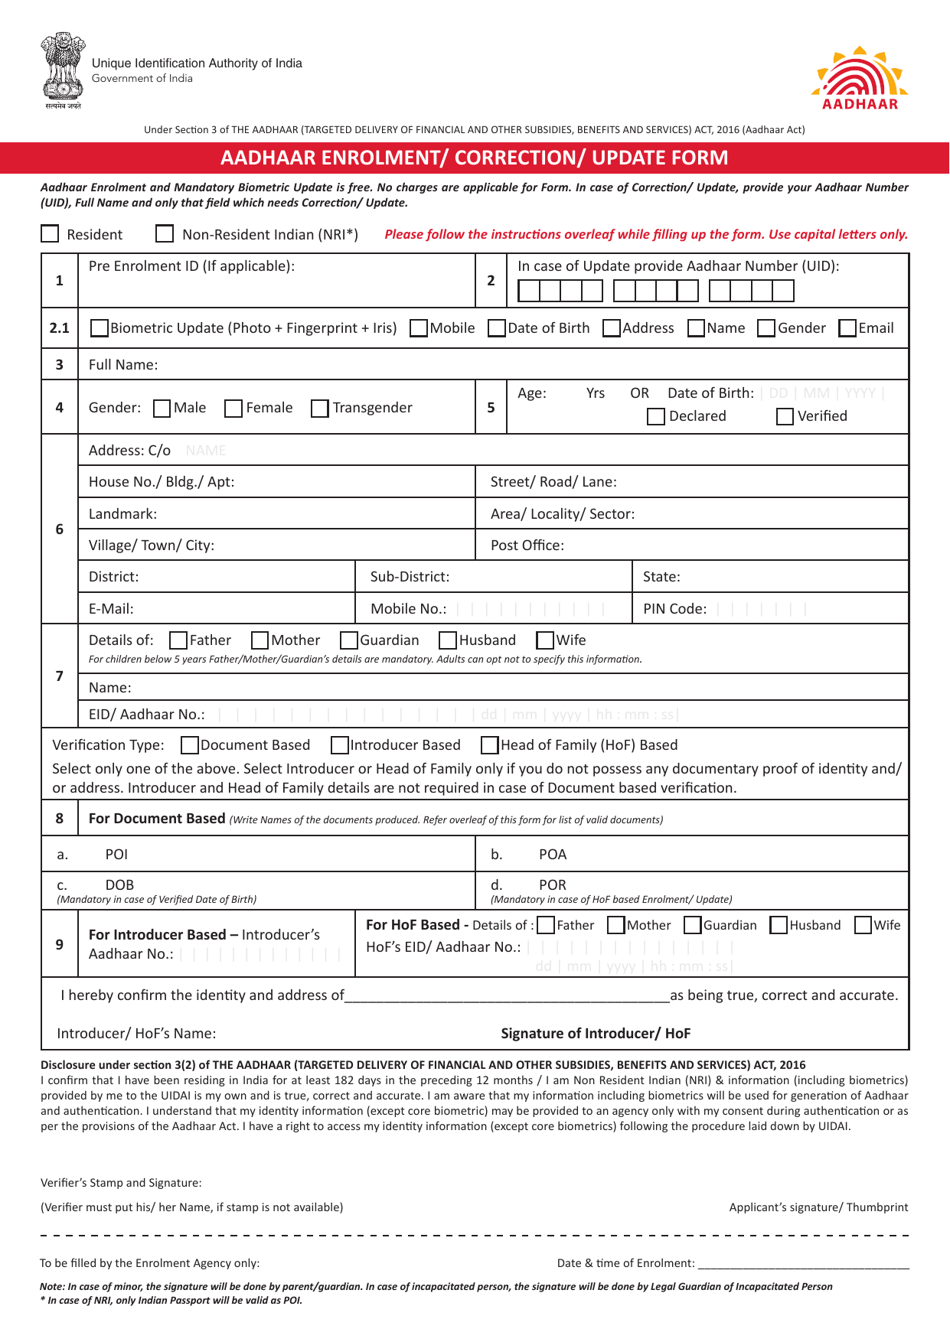 Aadhaar Enrolment / Correction / Update Form - India, Page 1